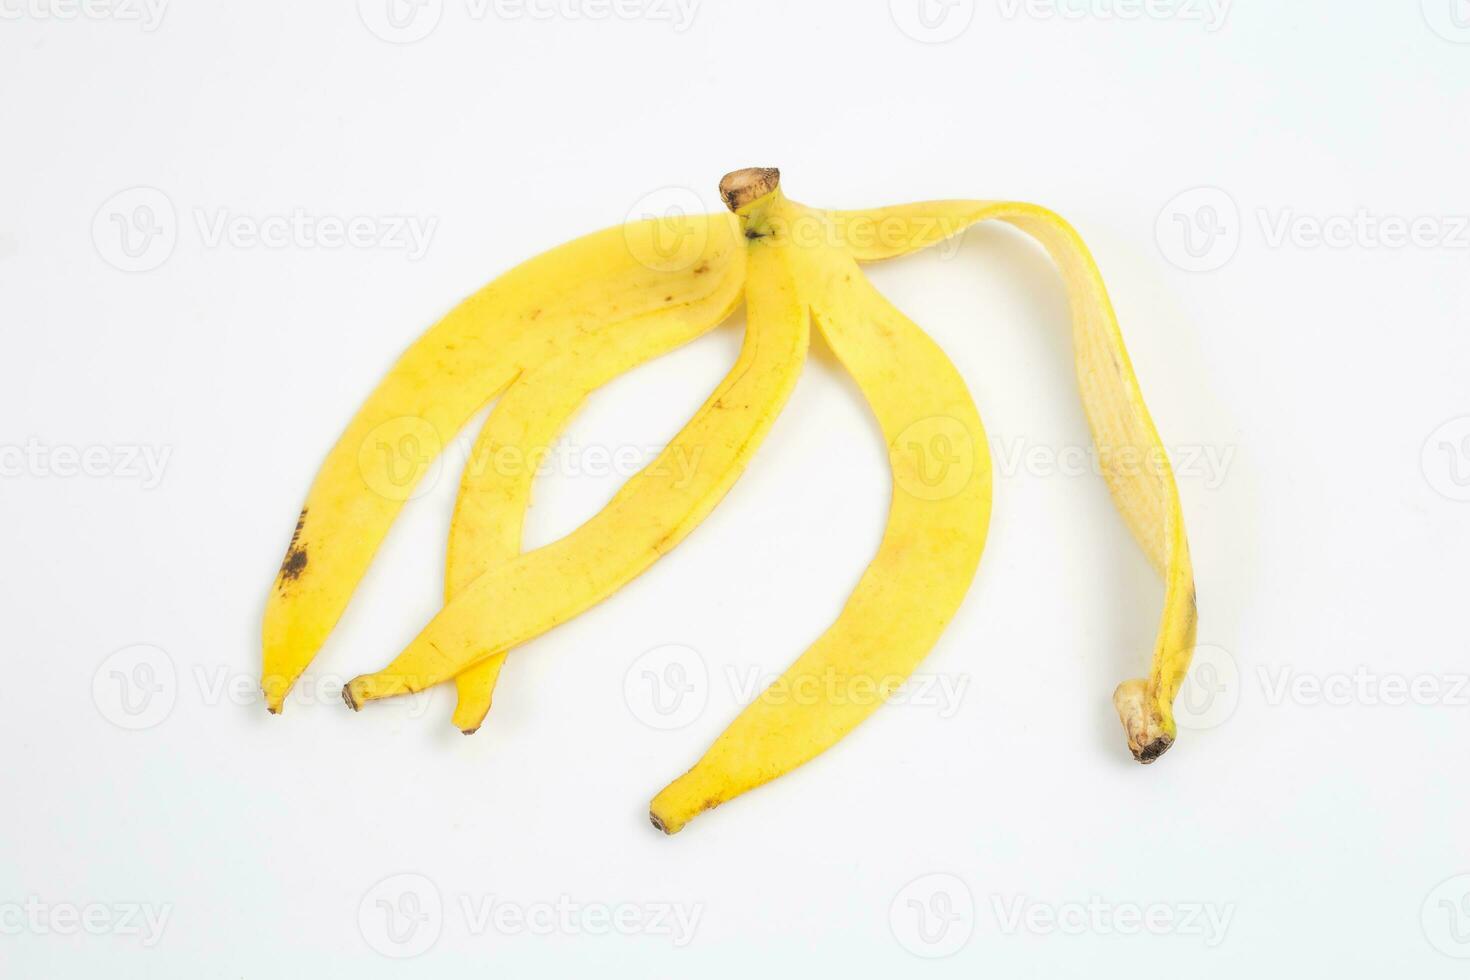 casca de banana no fundo branco foto